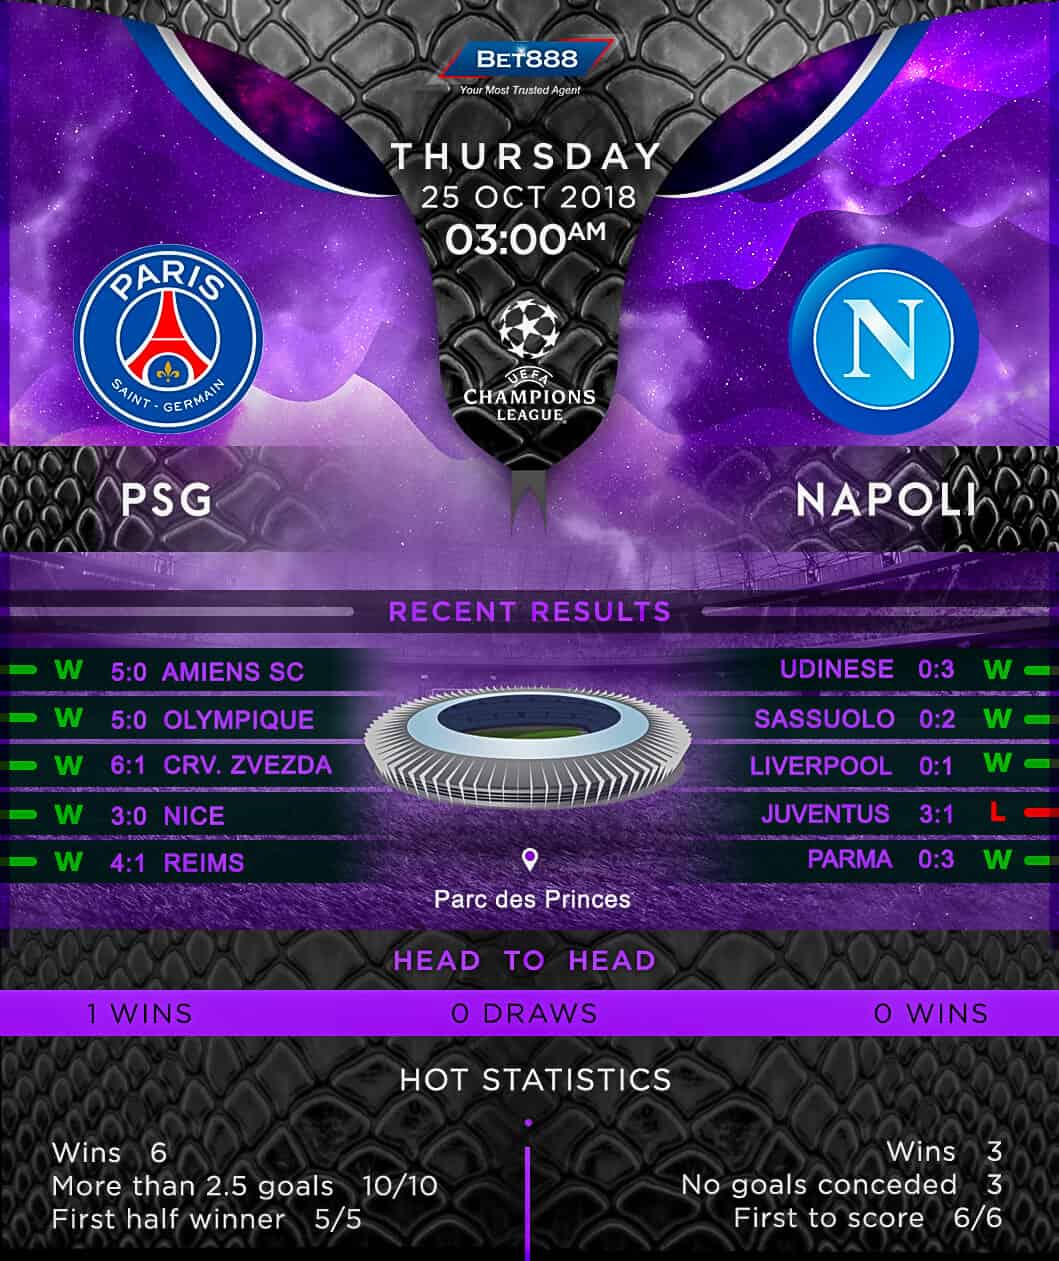 Paris Saint-Germain vs Napoli 25/10/18